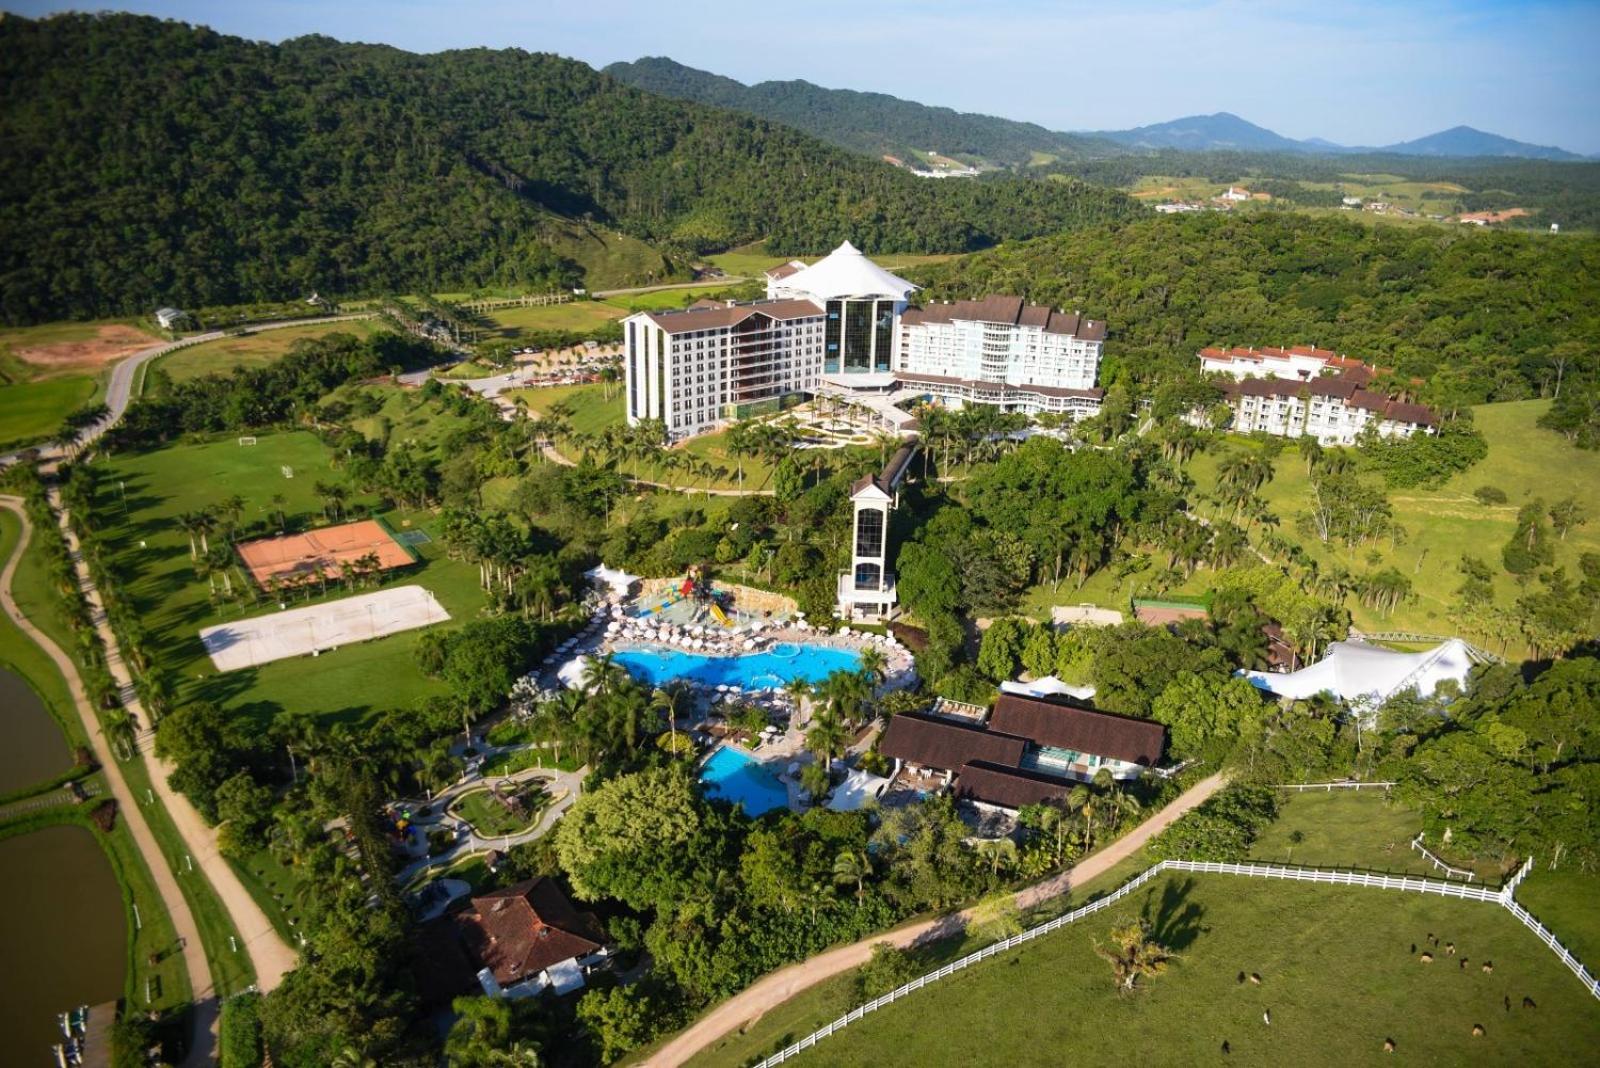 Fazzenda Park Resort Gaspar Buitenkant foto